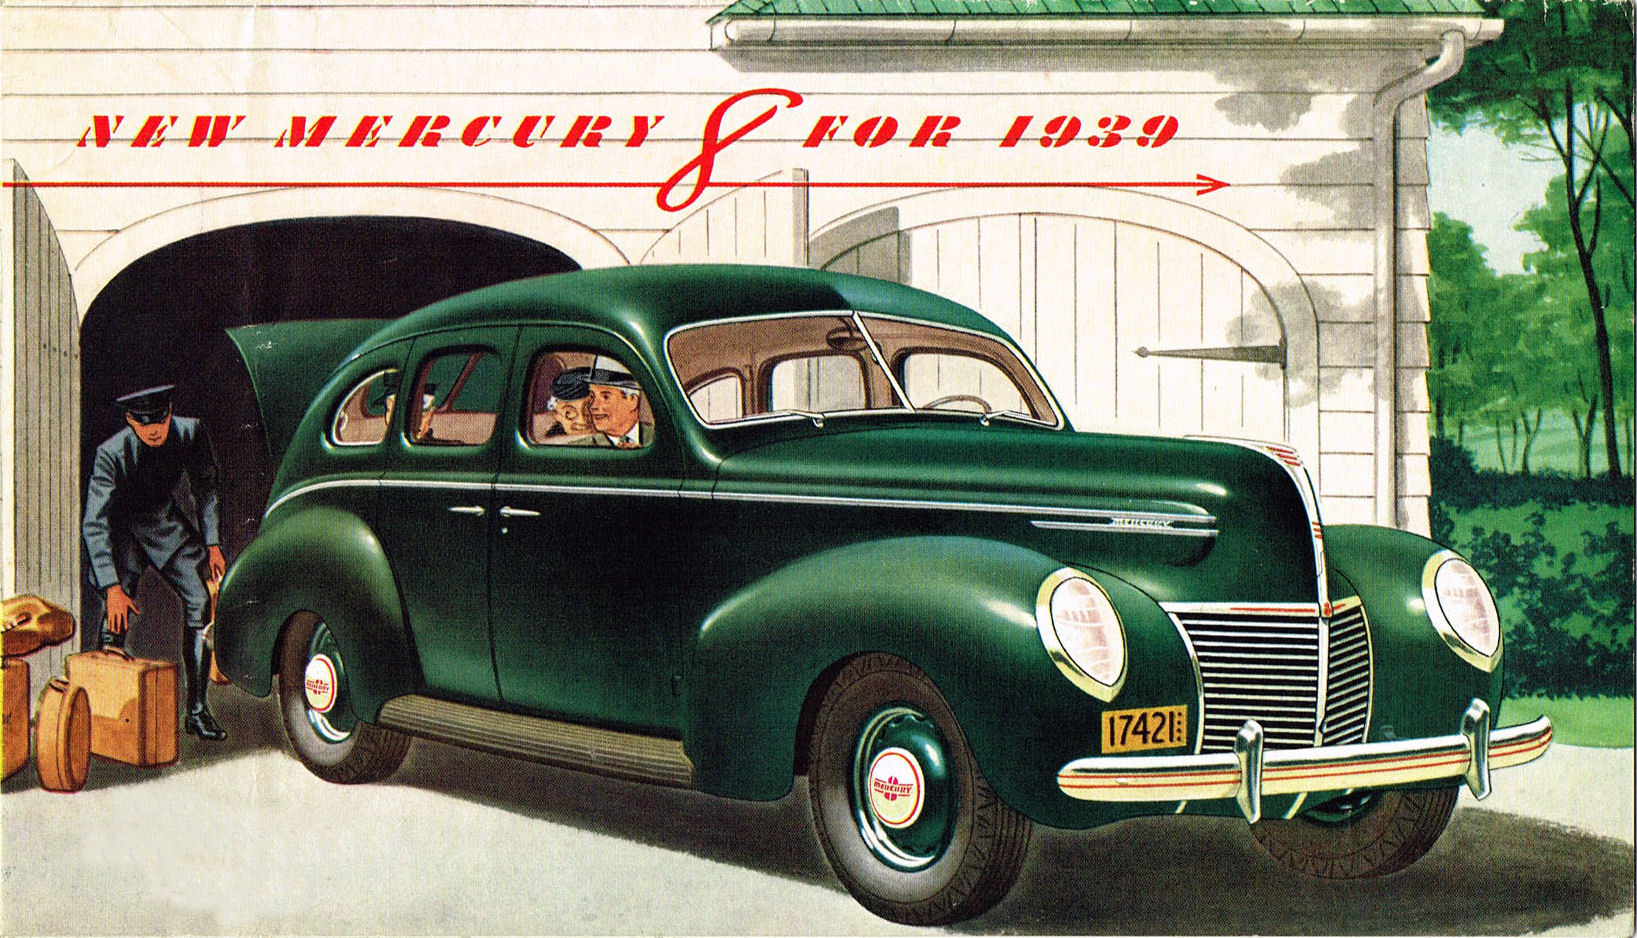 1939_Mercury_Foldout-01